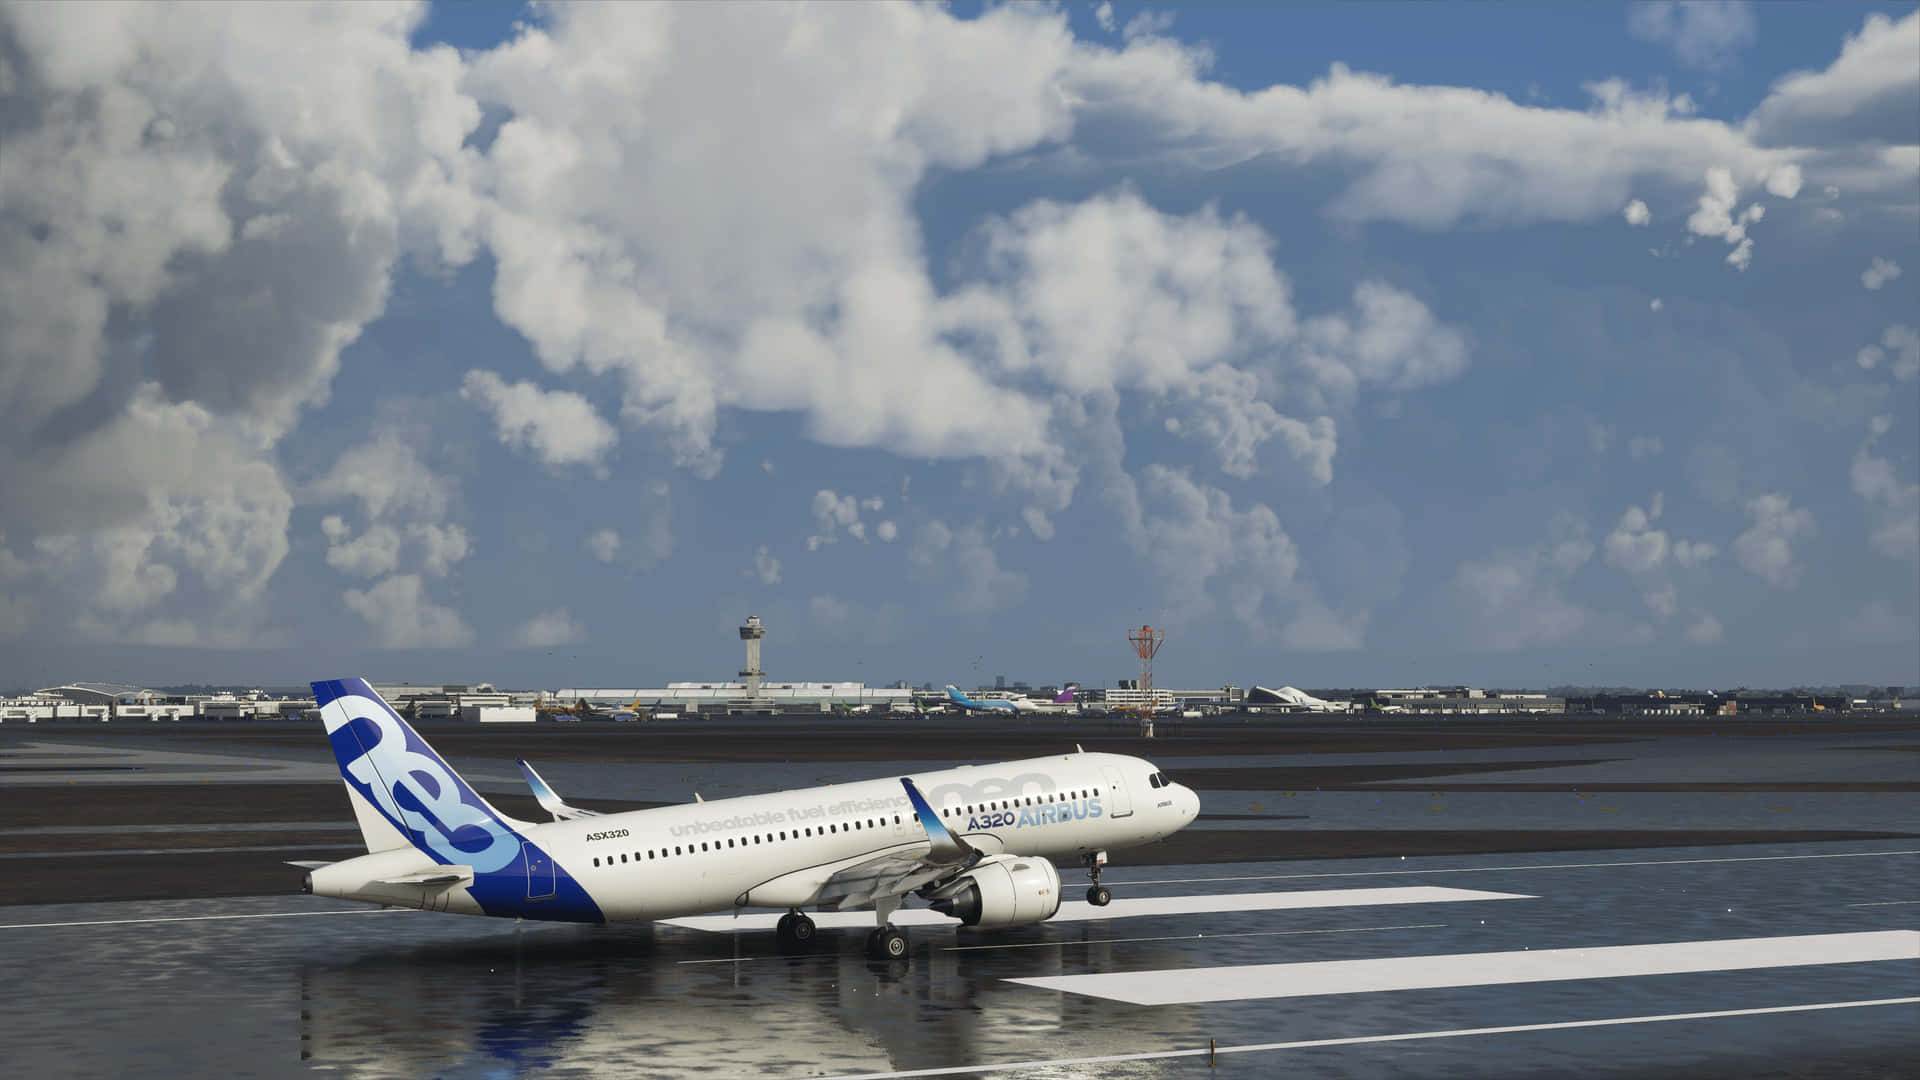 “Experience realistic flight action, with Microsoft Flight Simulator”